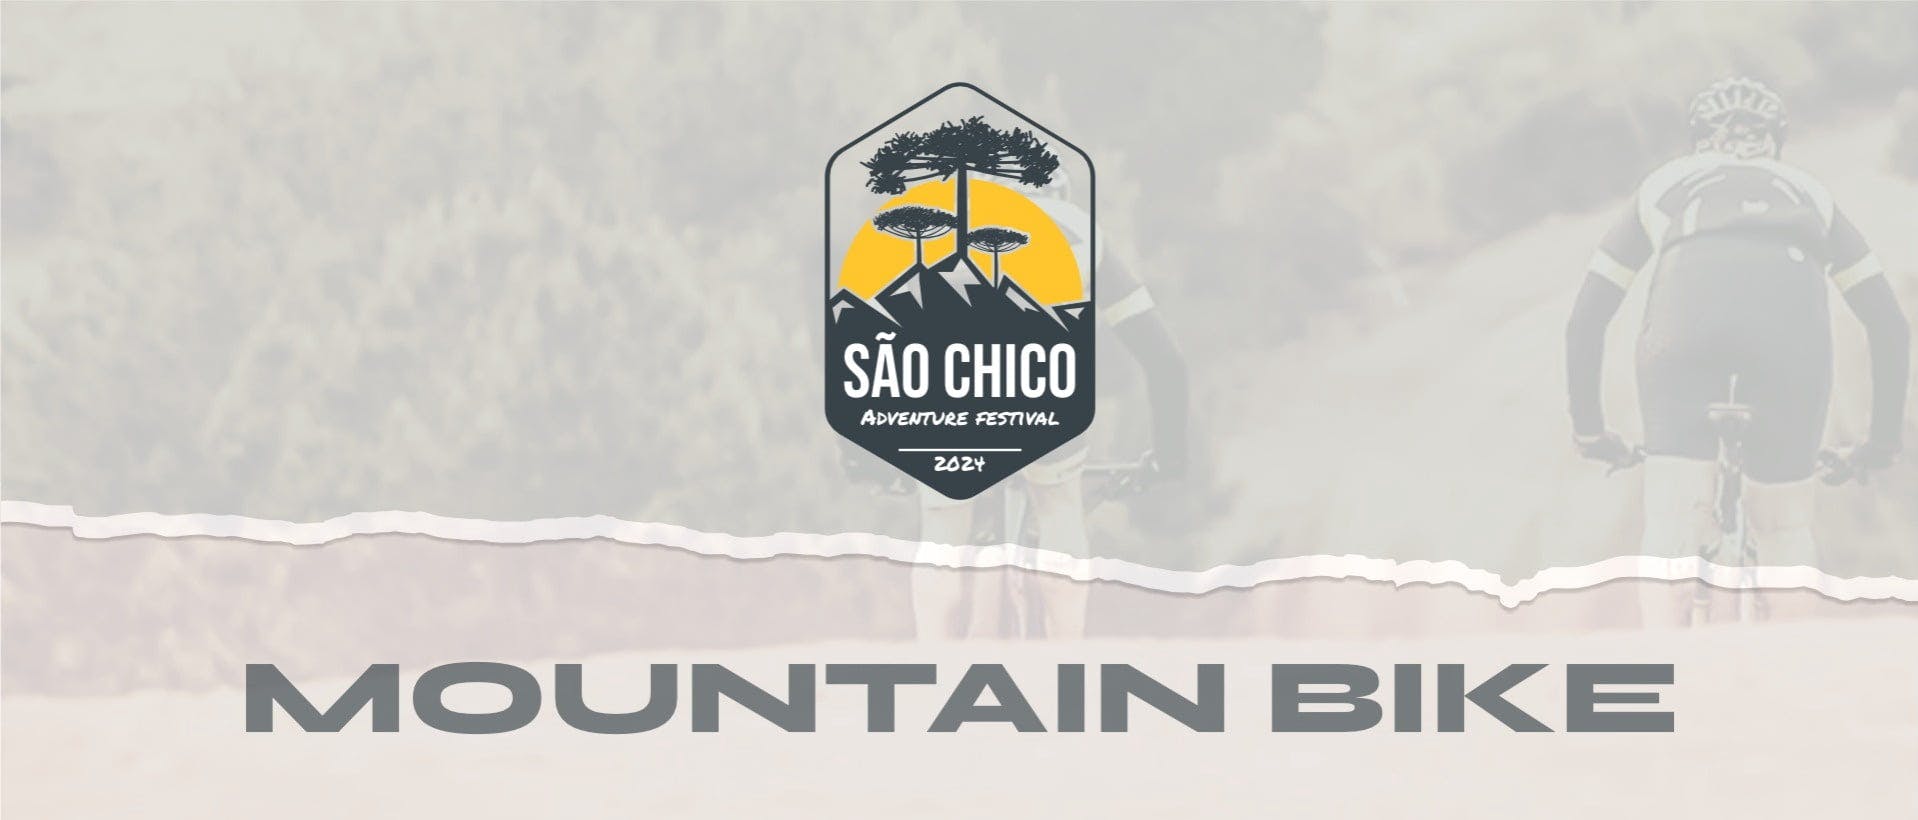 São Chico Adventure Festival - Mountain Bike